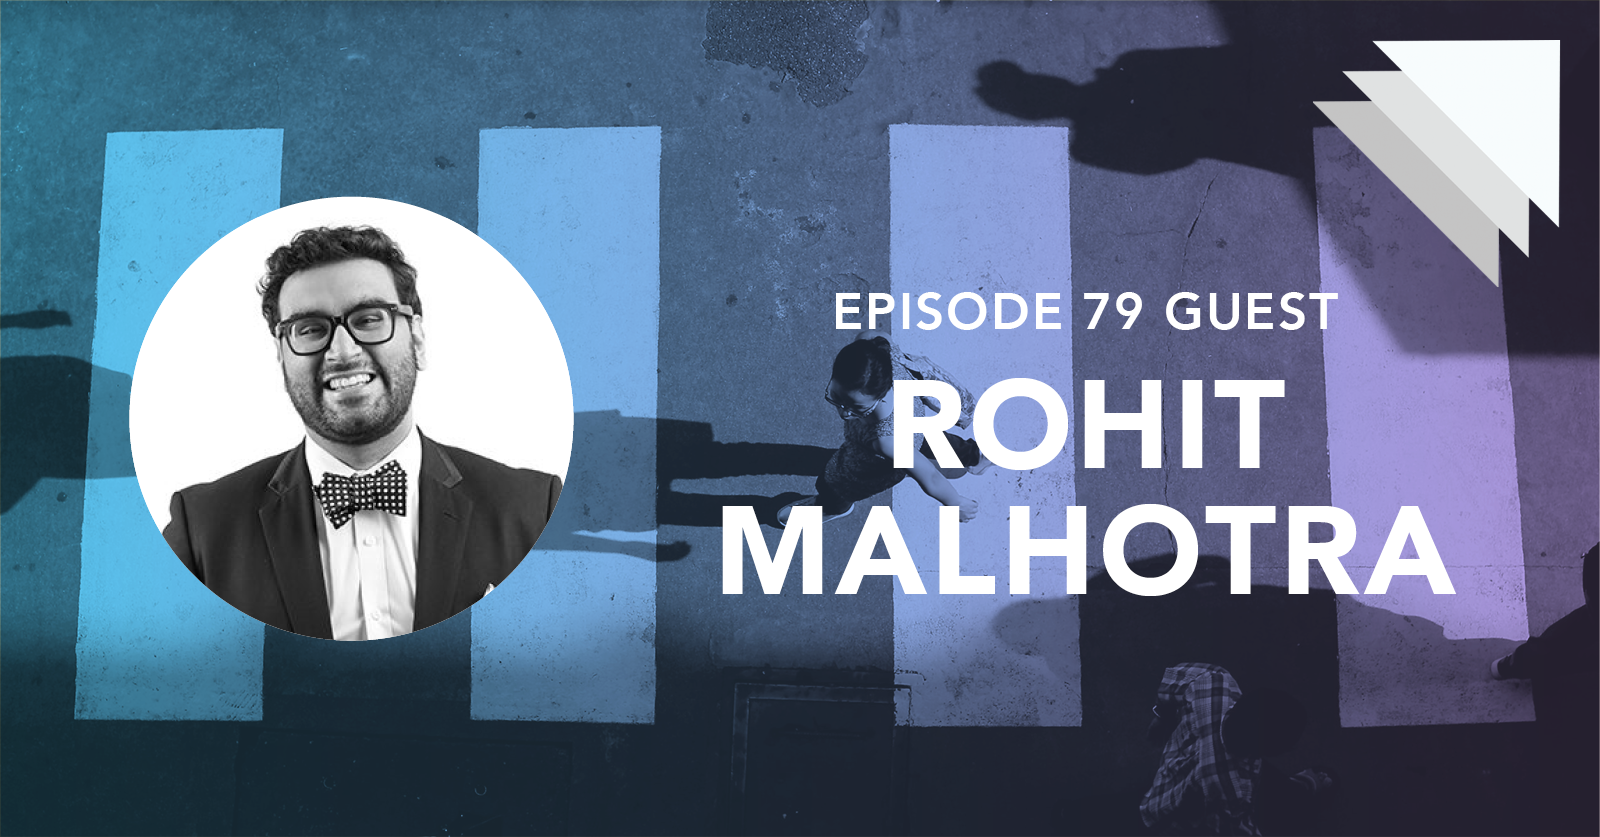 Episode 79 guest Rohit Malhotra